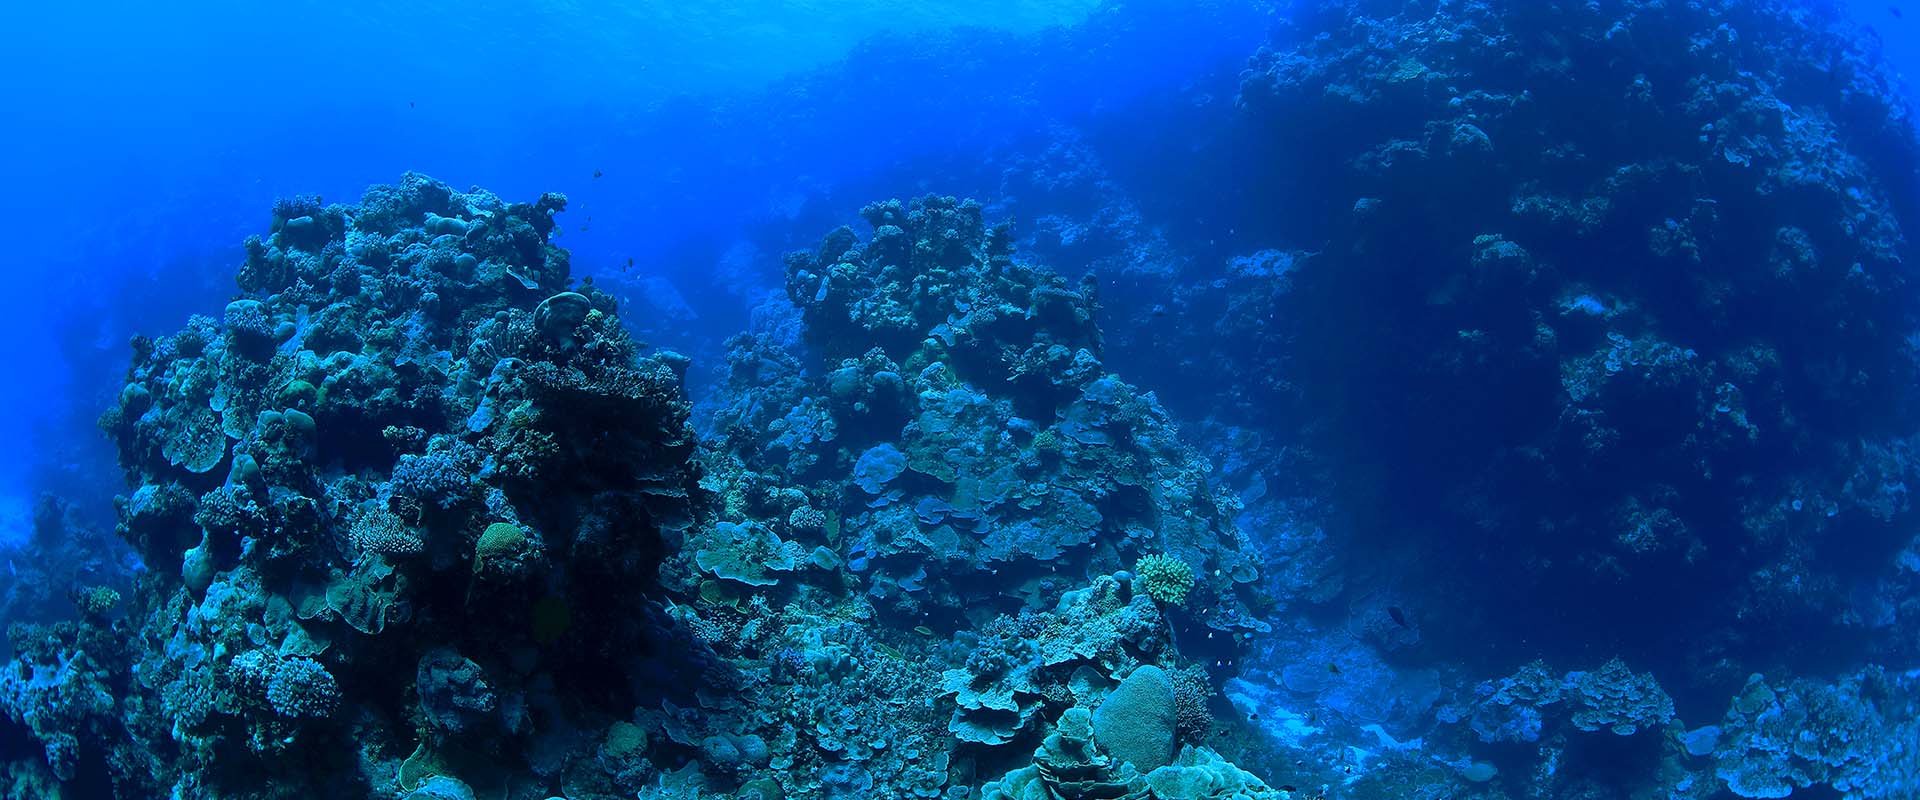 Bougainville Reef Liveaboard Diving